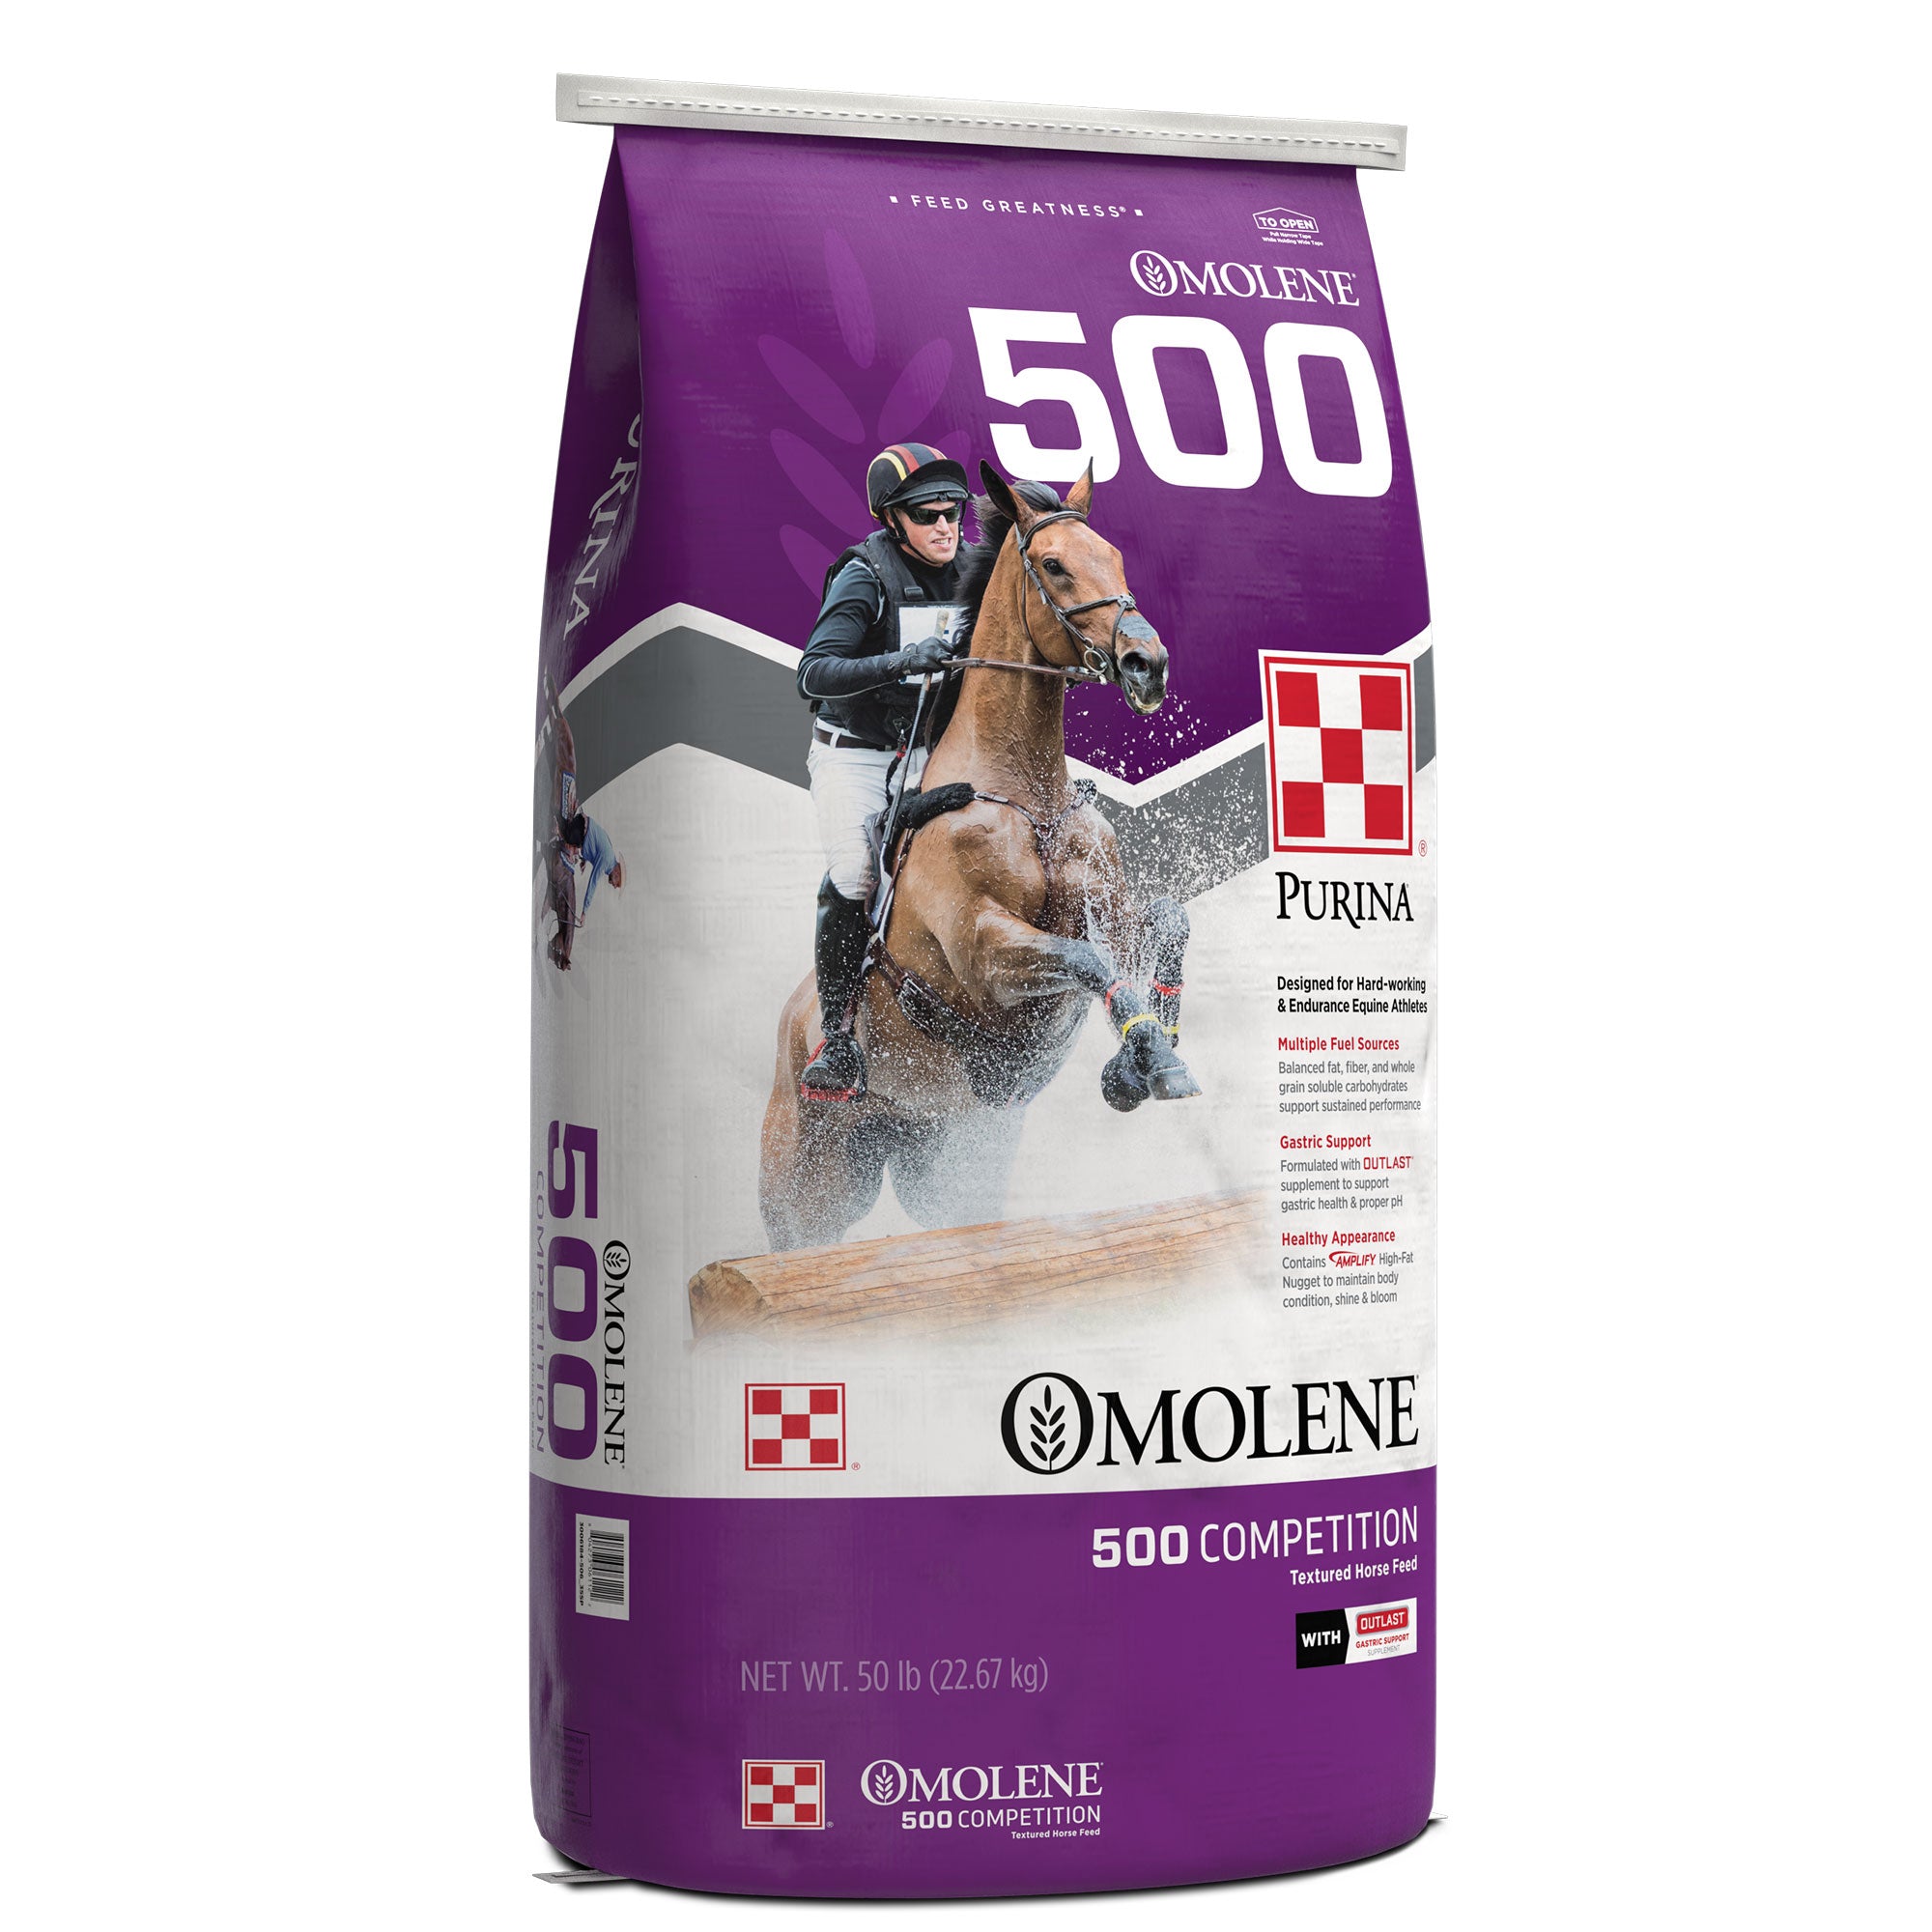 Purina® Omolene® #500 Competition Horse Feed